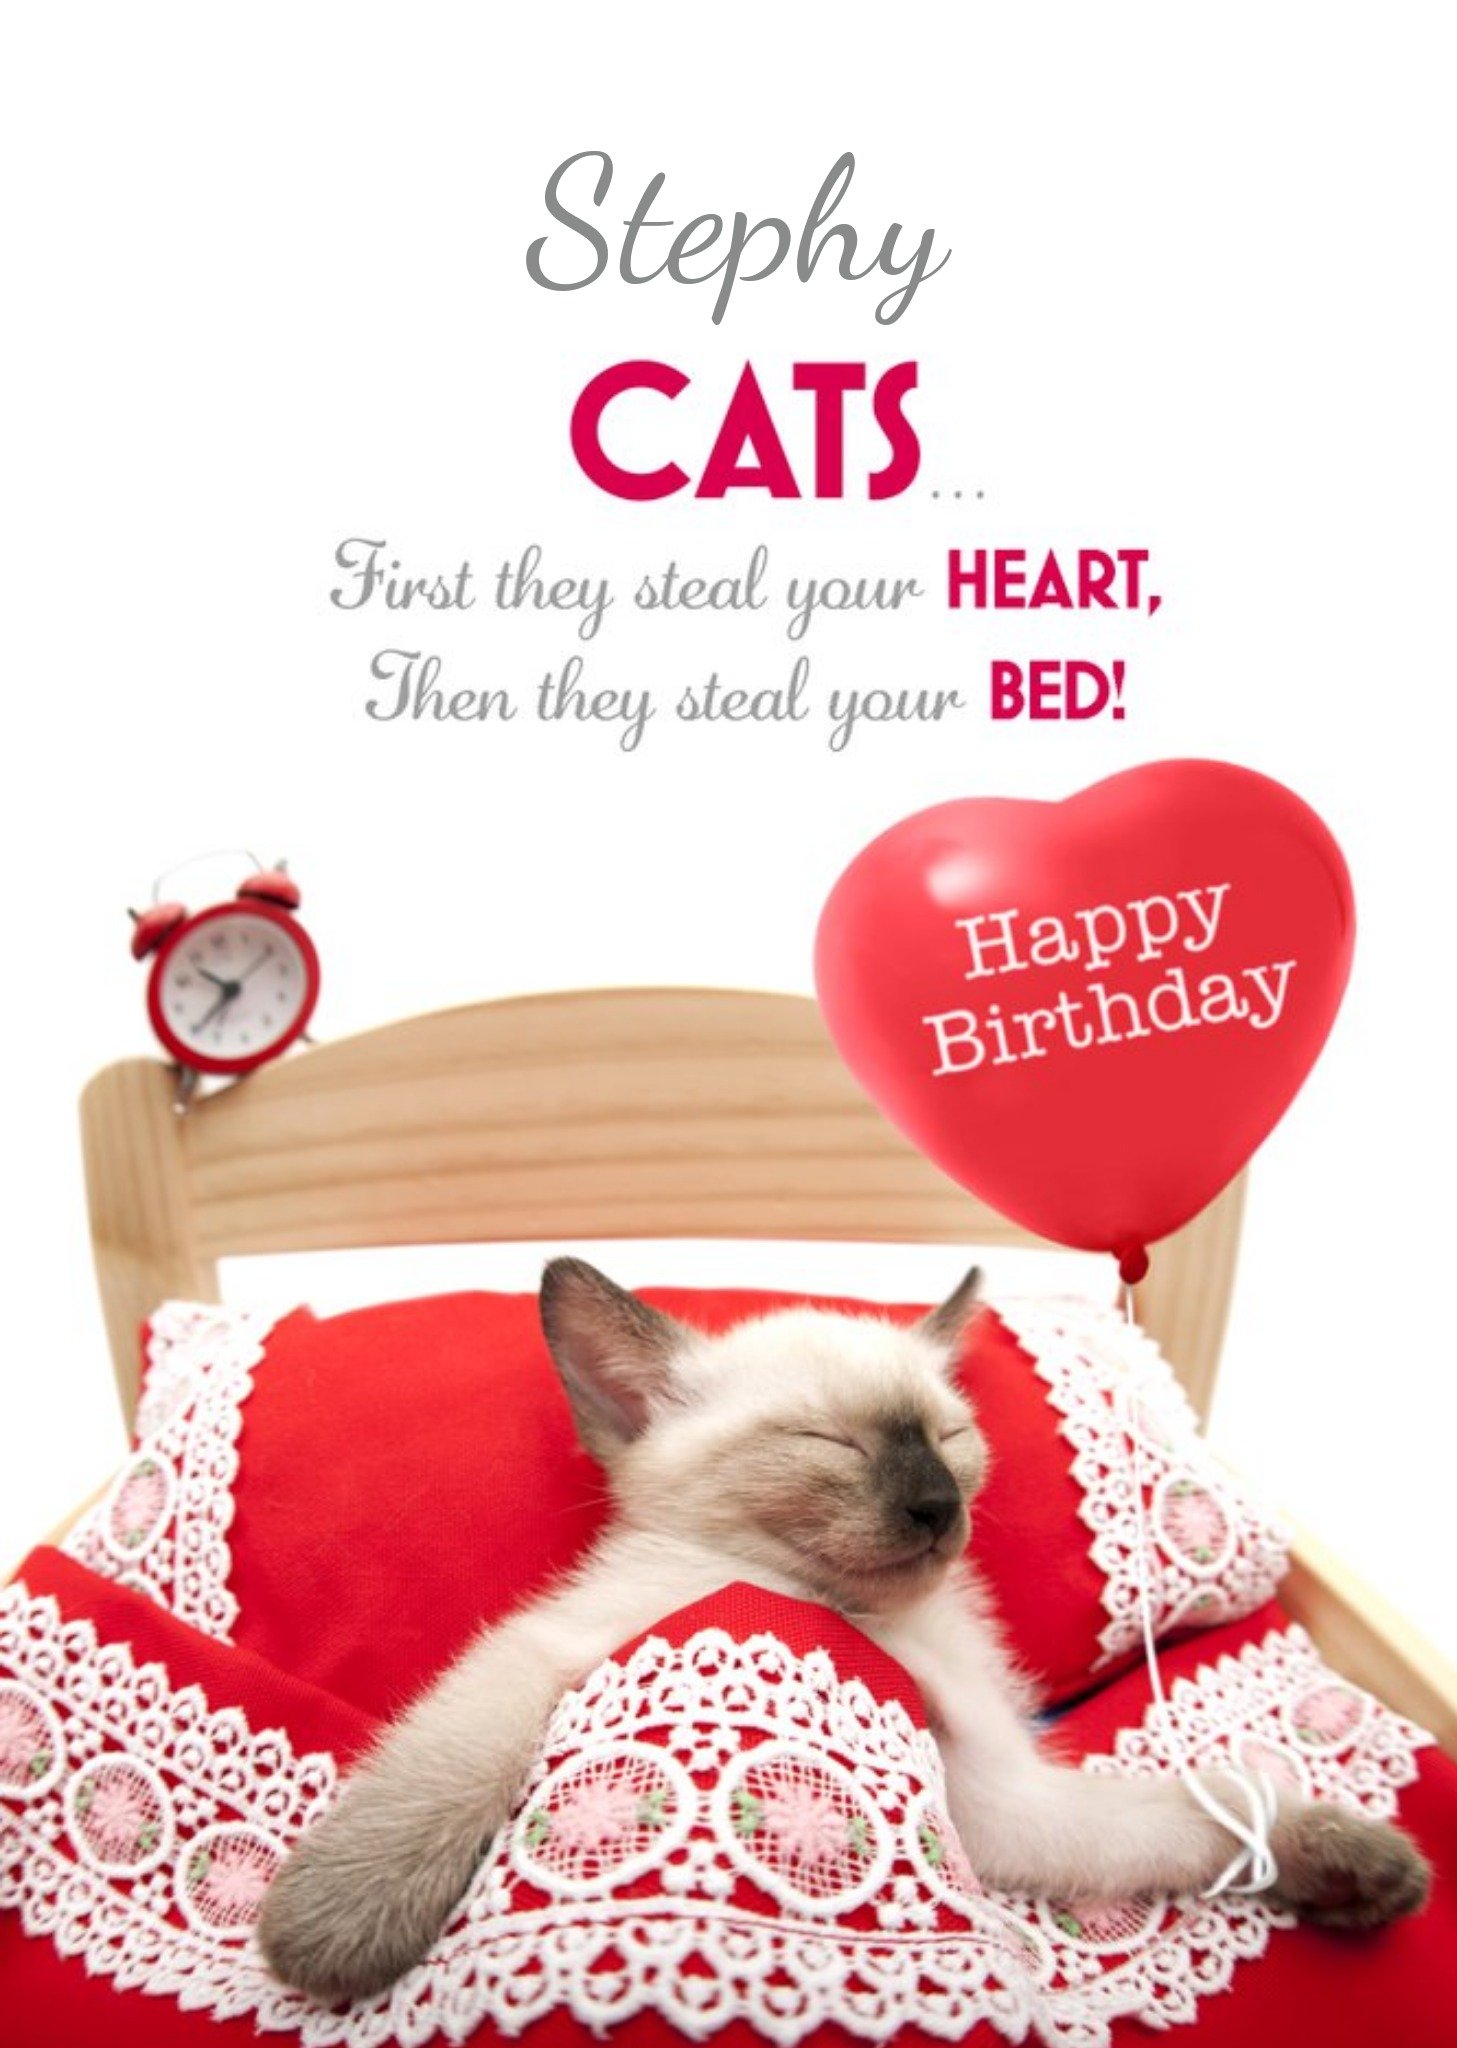 Moonpig Sleepy Cat With Heart Balloon Personalised Happy Birthday Card, Large